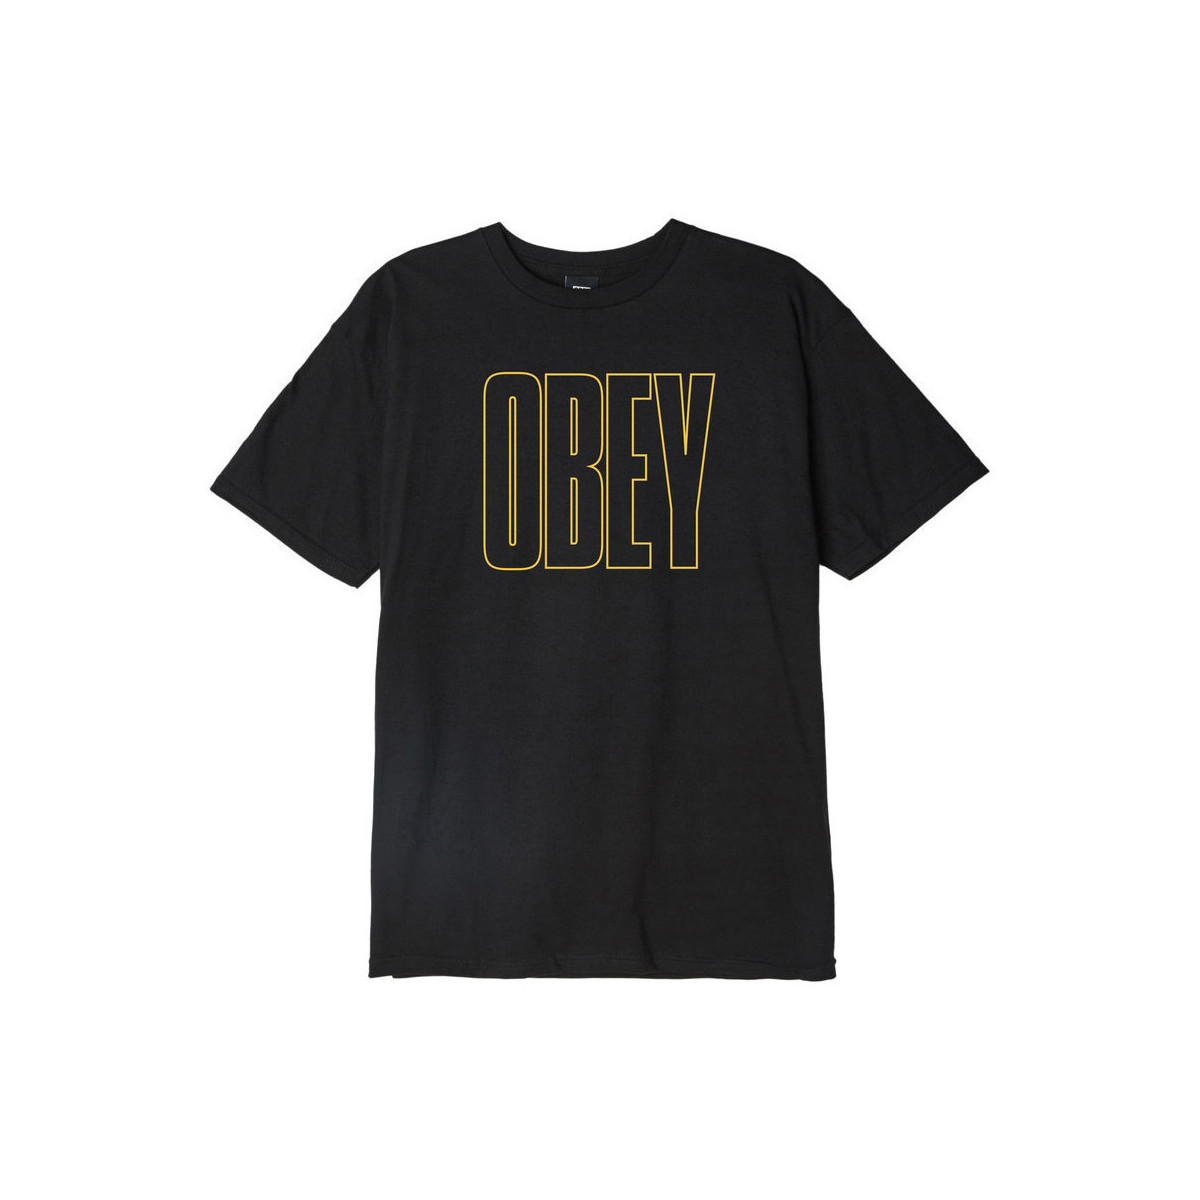 textil Herre T-shirts & poloer Obey worldwide line Sort